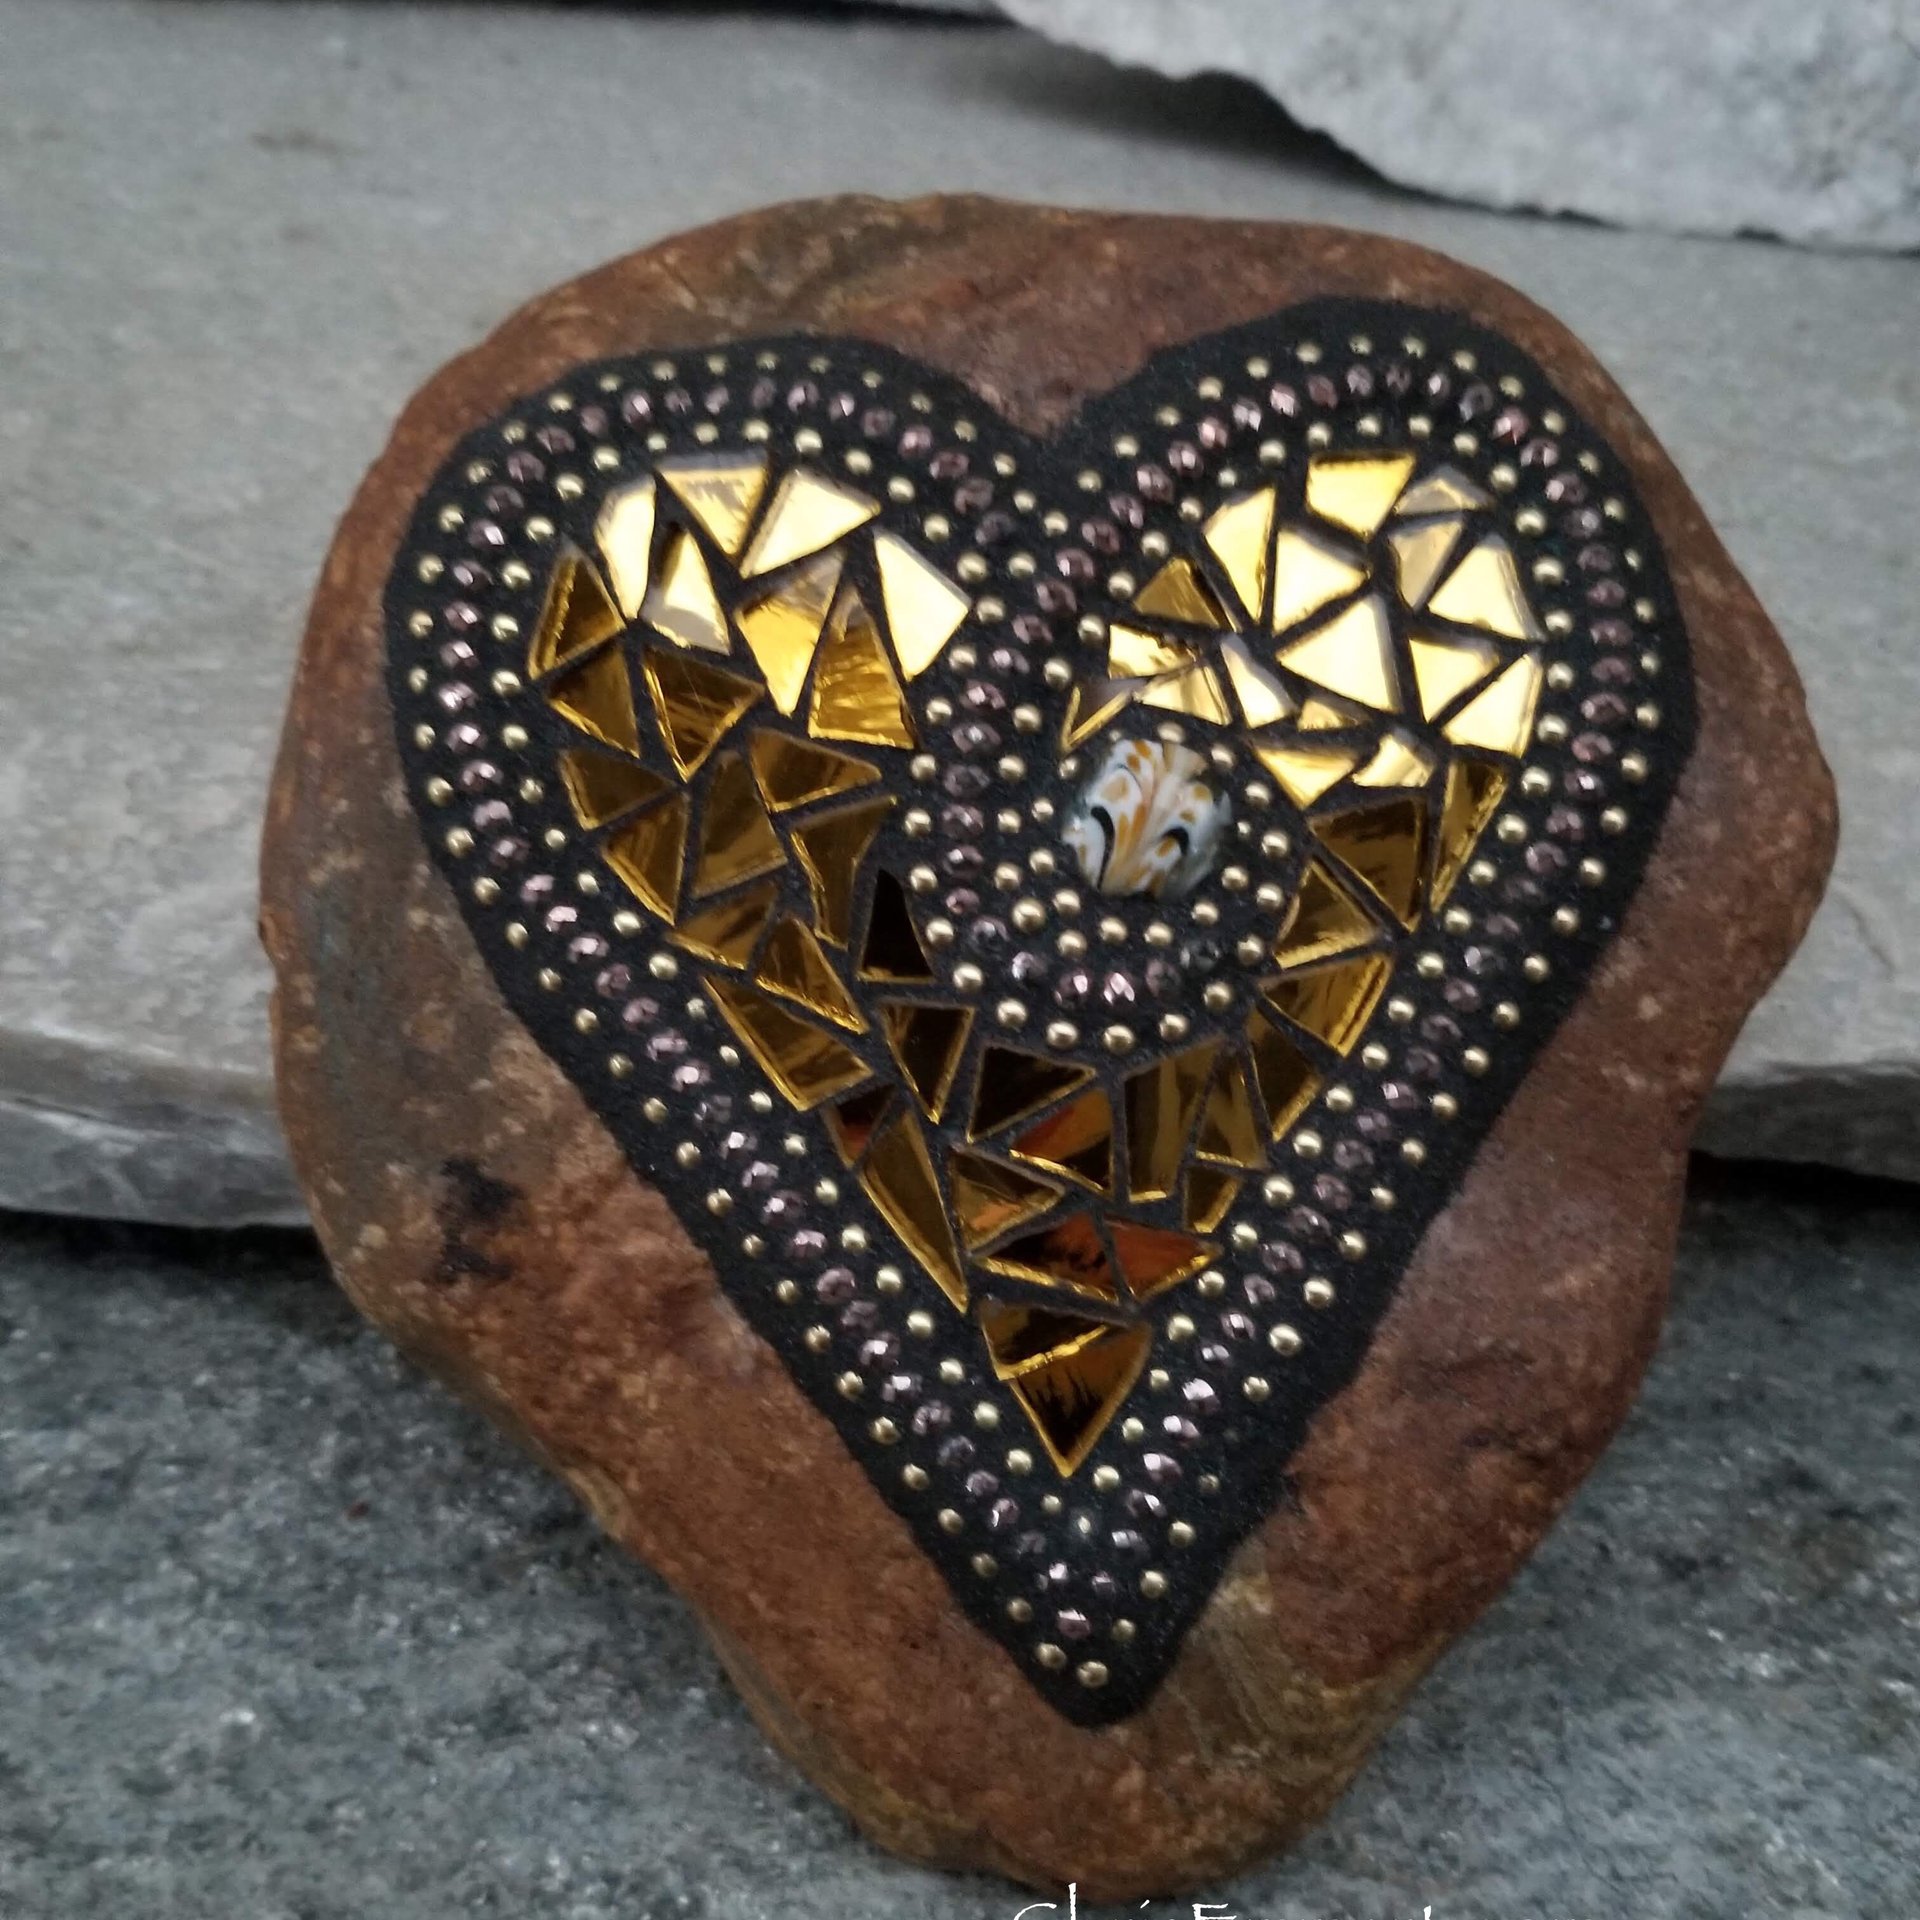 Gold Mirror Heart (1), Mosaic Paperweight / Garden Stone